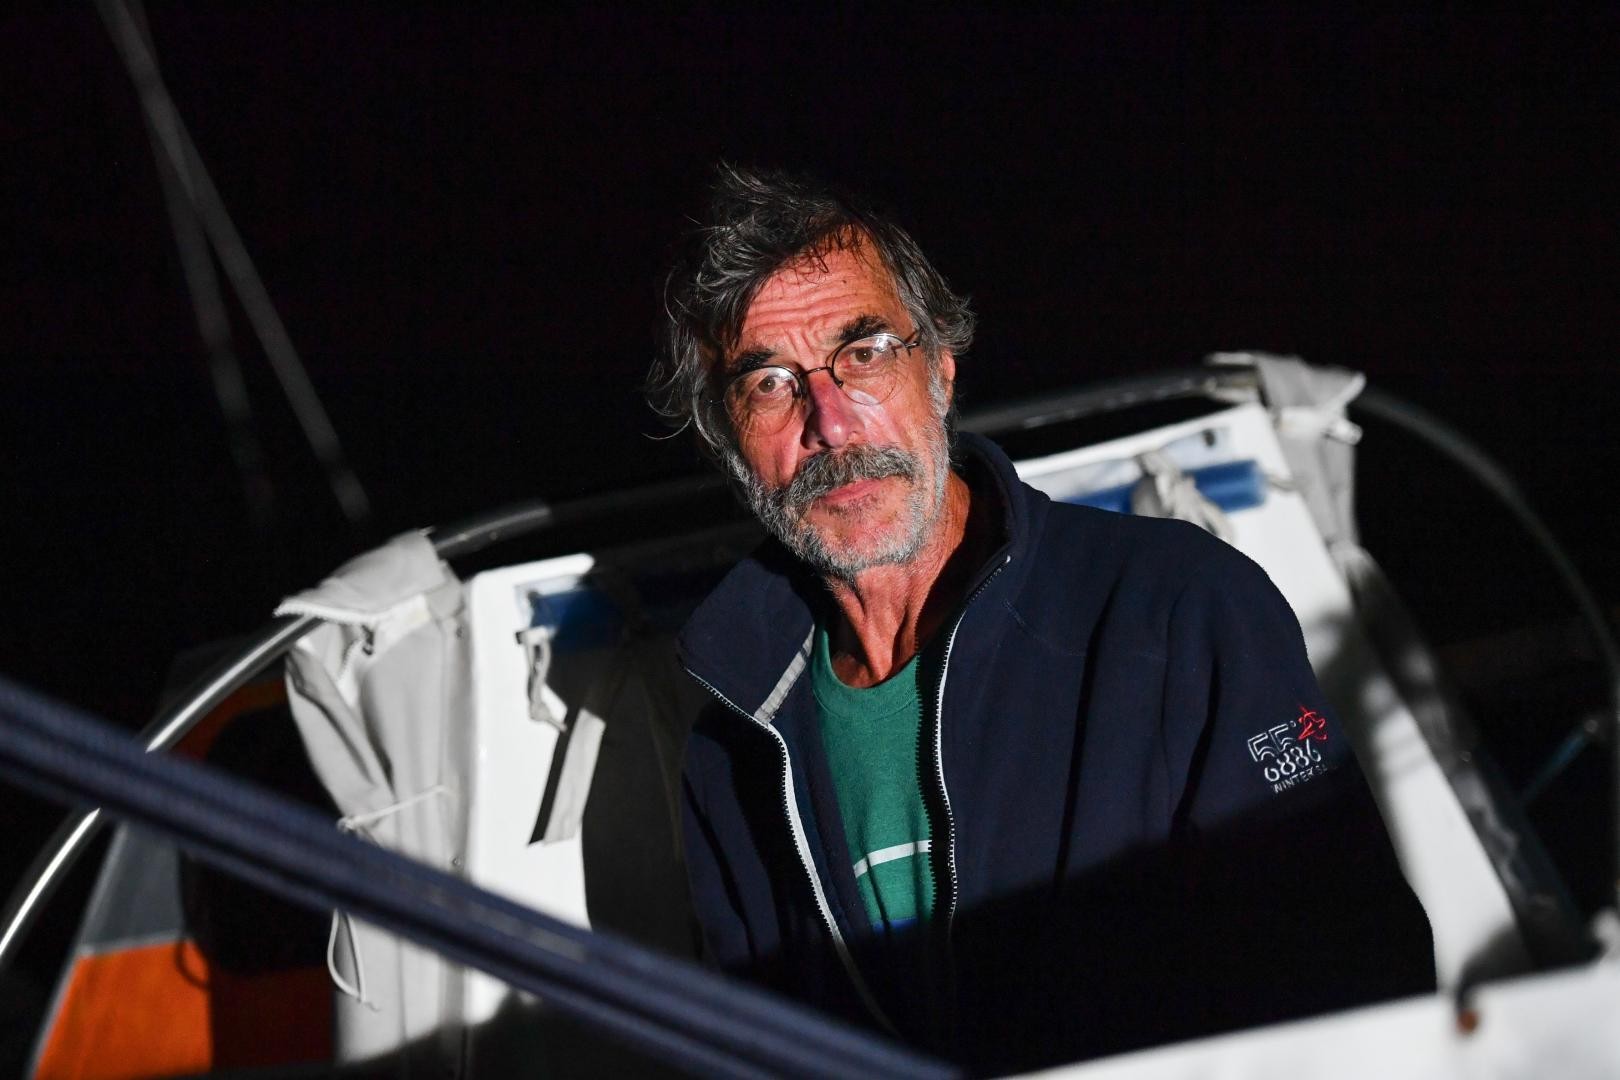 Loïc Lepage awaiting rescue overnight